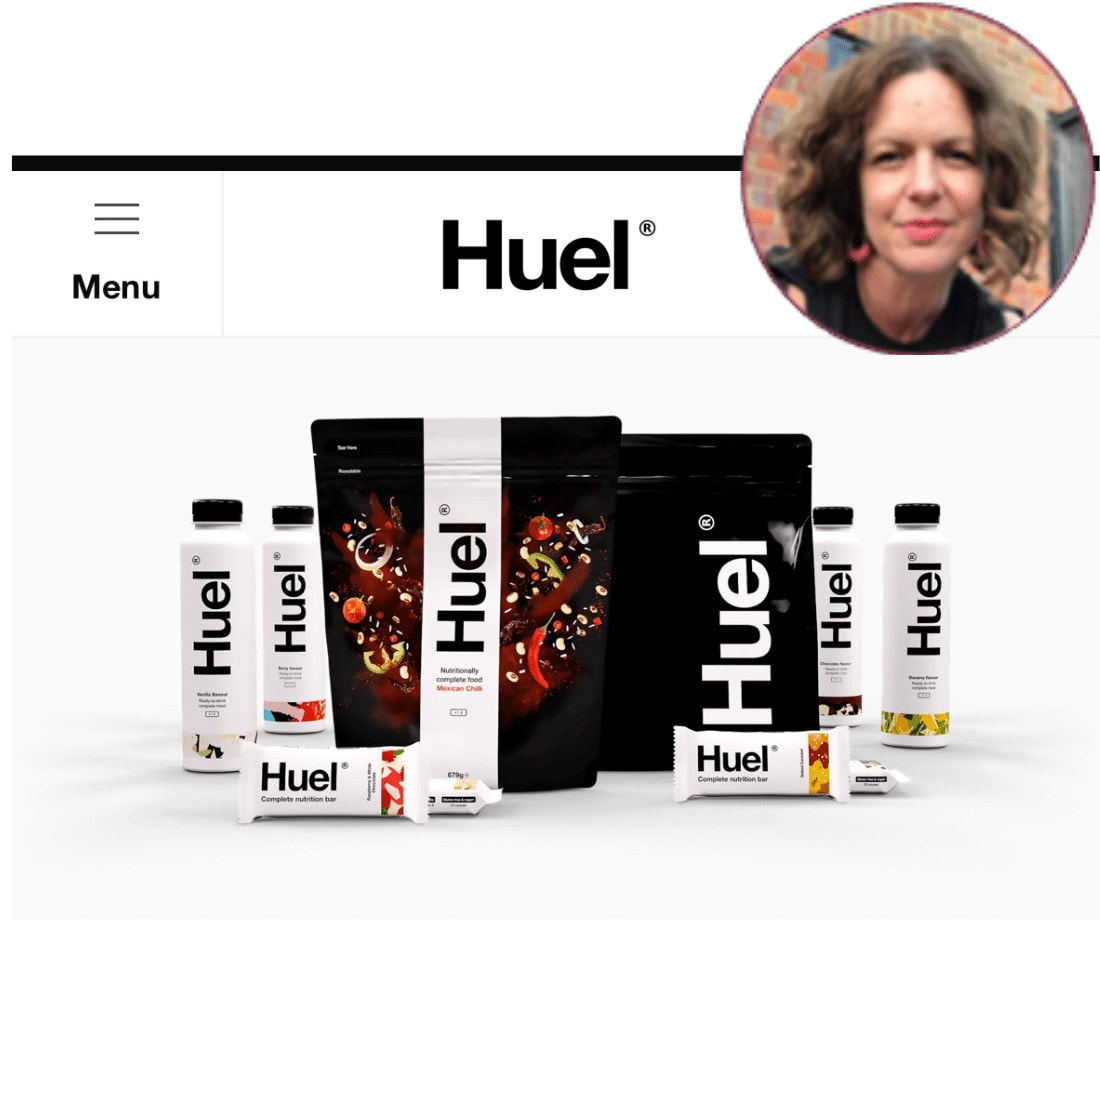 Huel product range plus a head shot of Louise Cruttenden